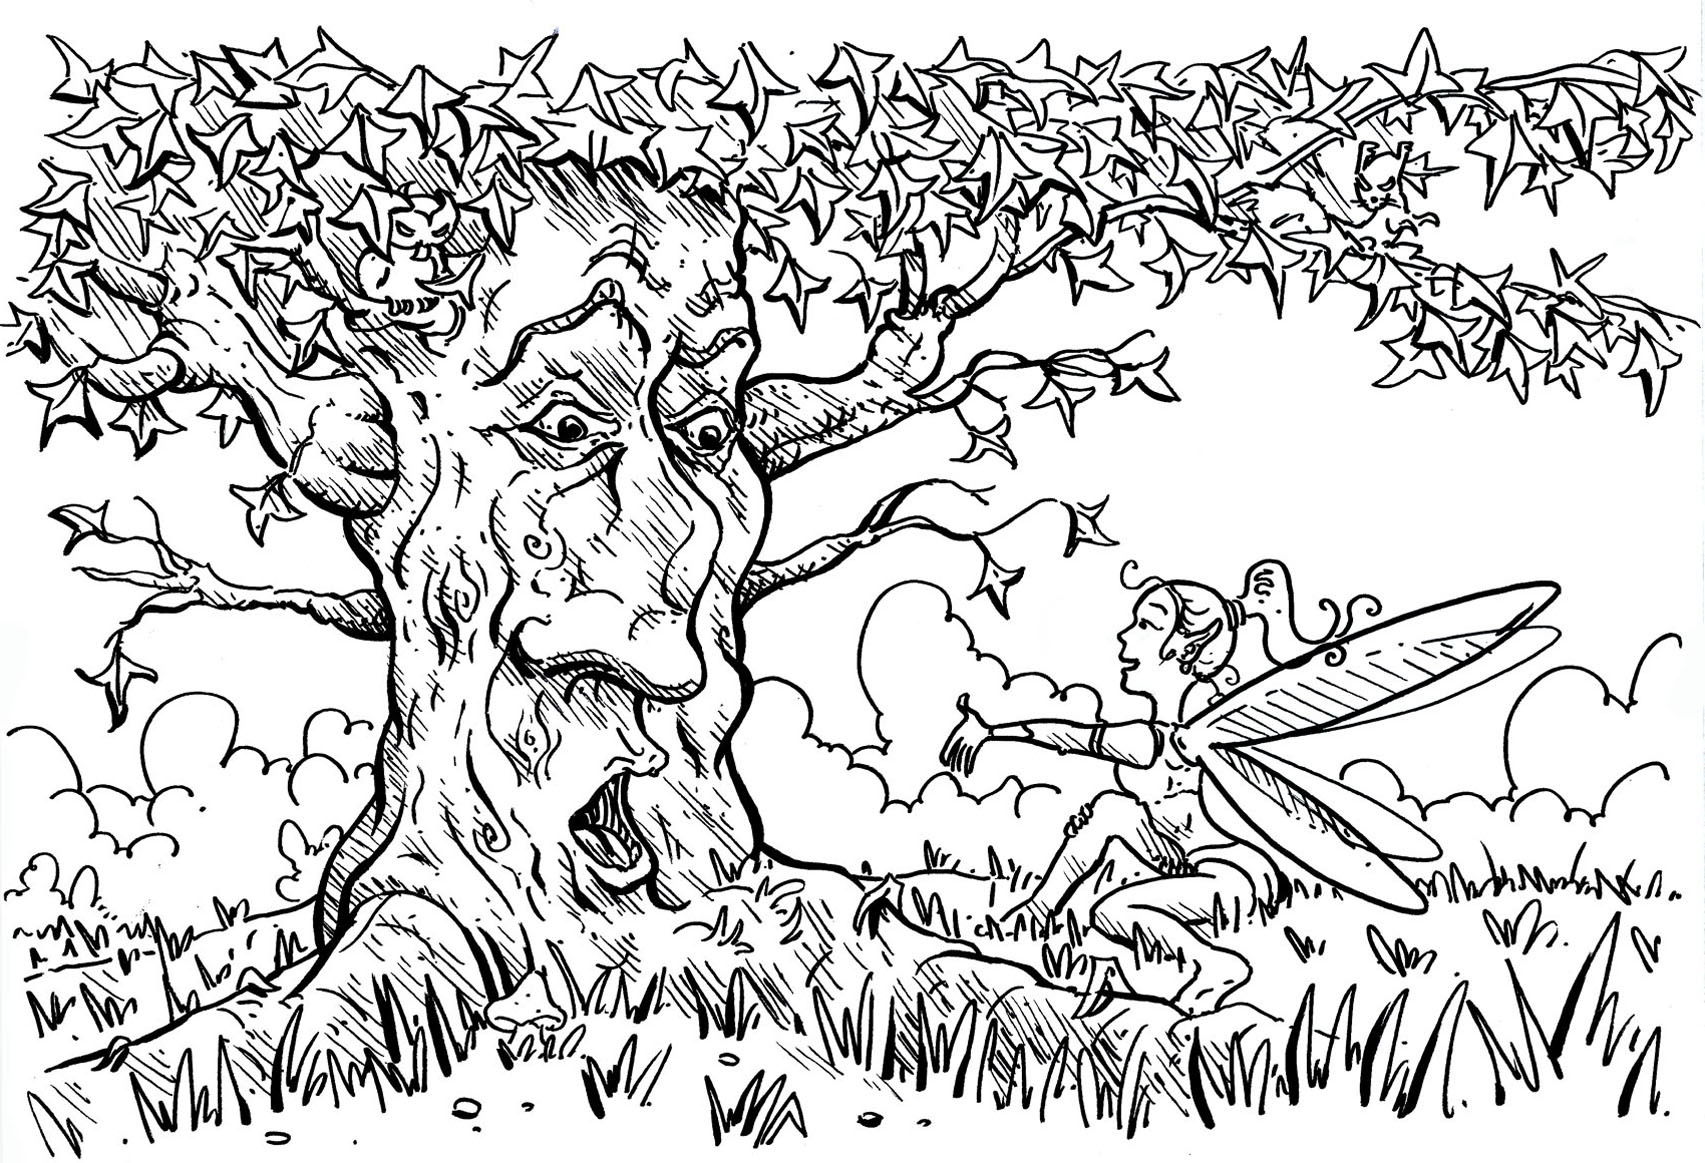 Original tree drawing, to print & color